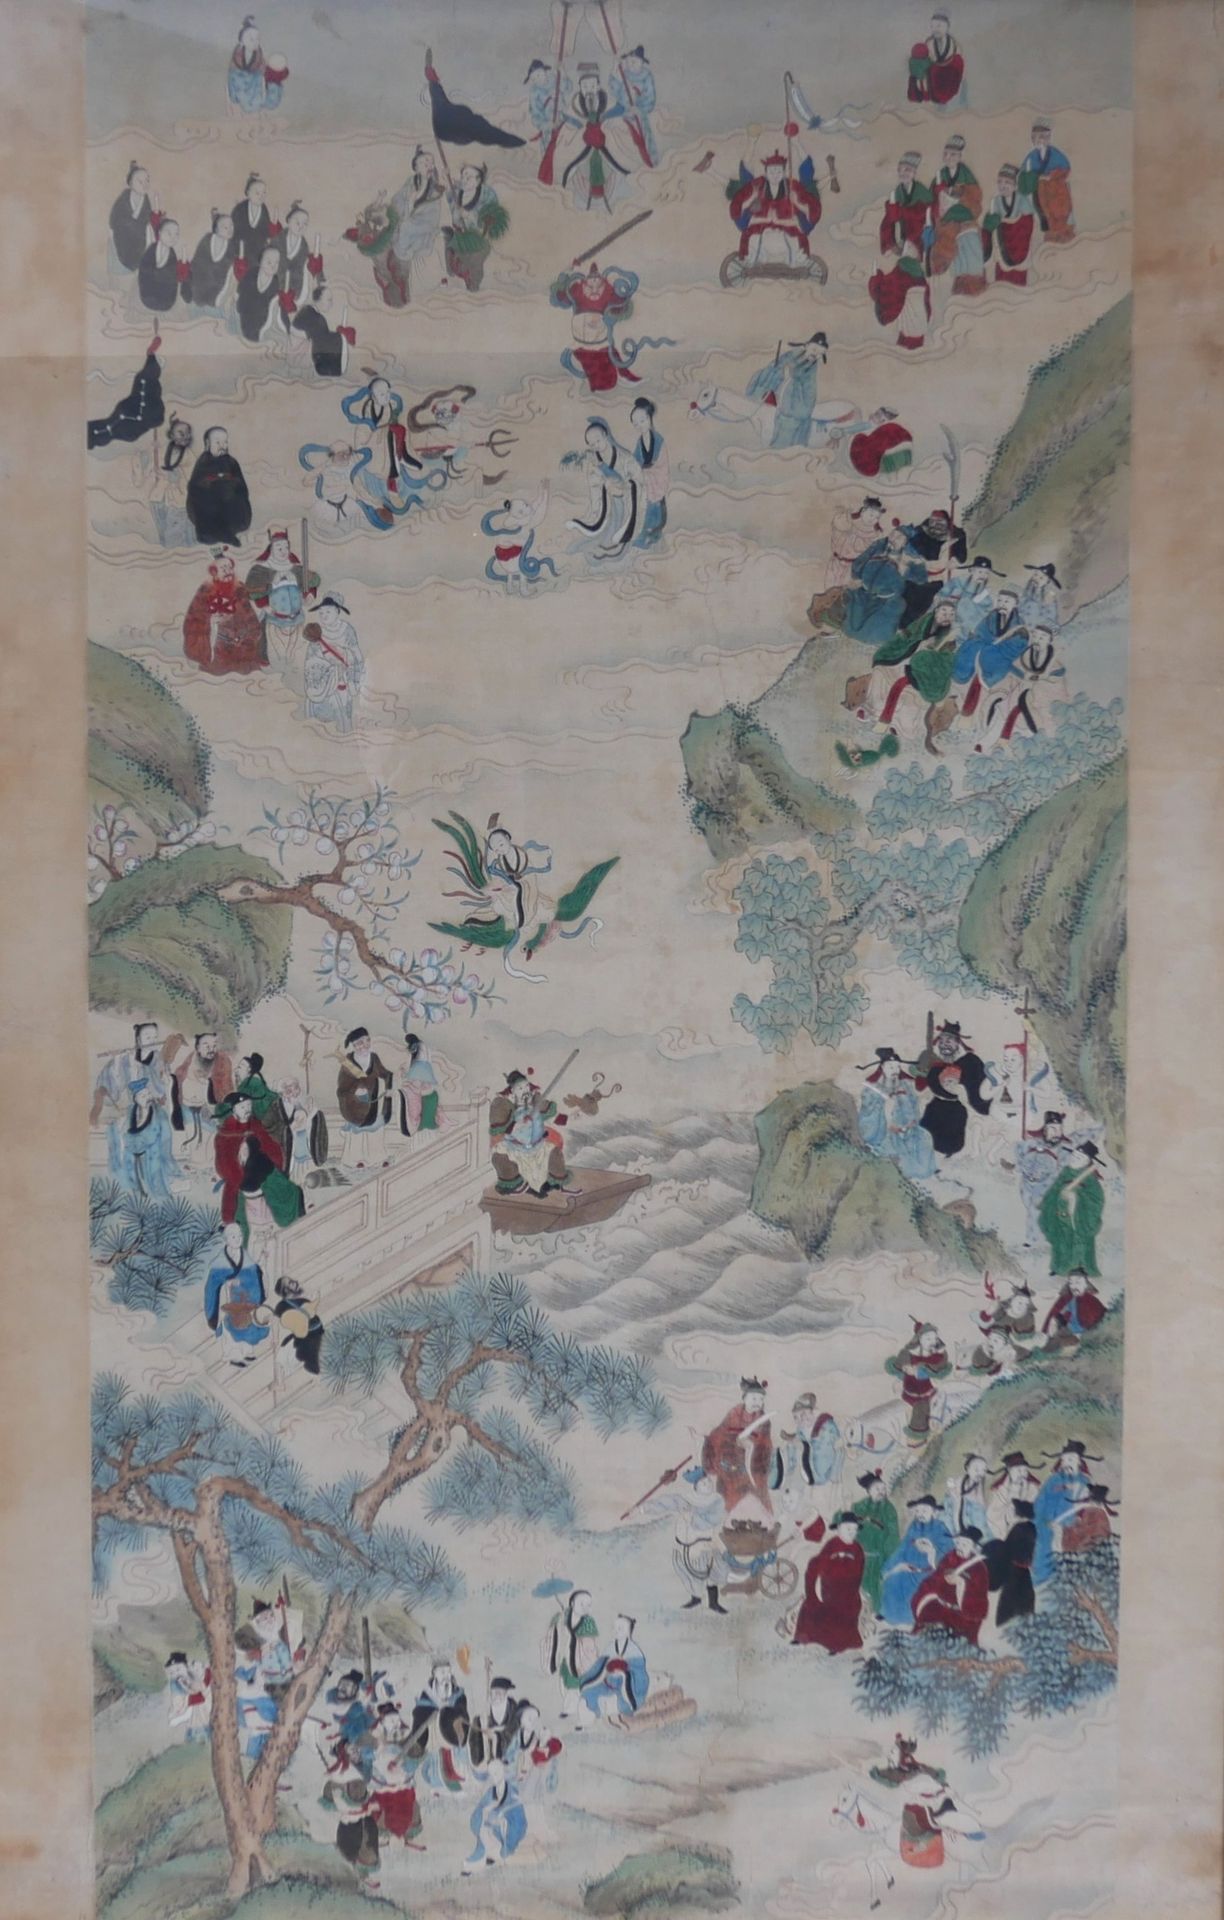 Null 
19世纪下半叶的中国学校。




八仙过海，各显神通的 "道 "景象




纸上水墨和彩色绘画




117 x 61.5厘米。正在展出


&hellip;